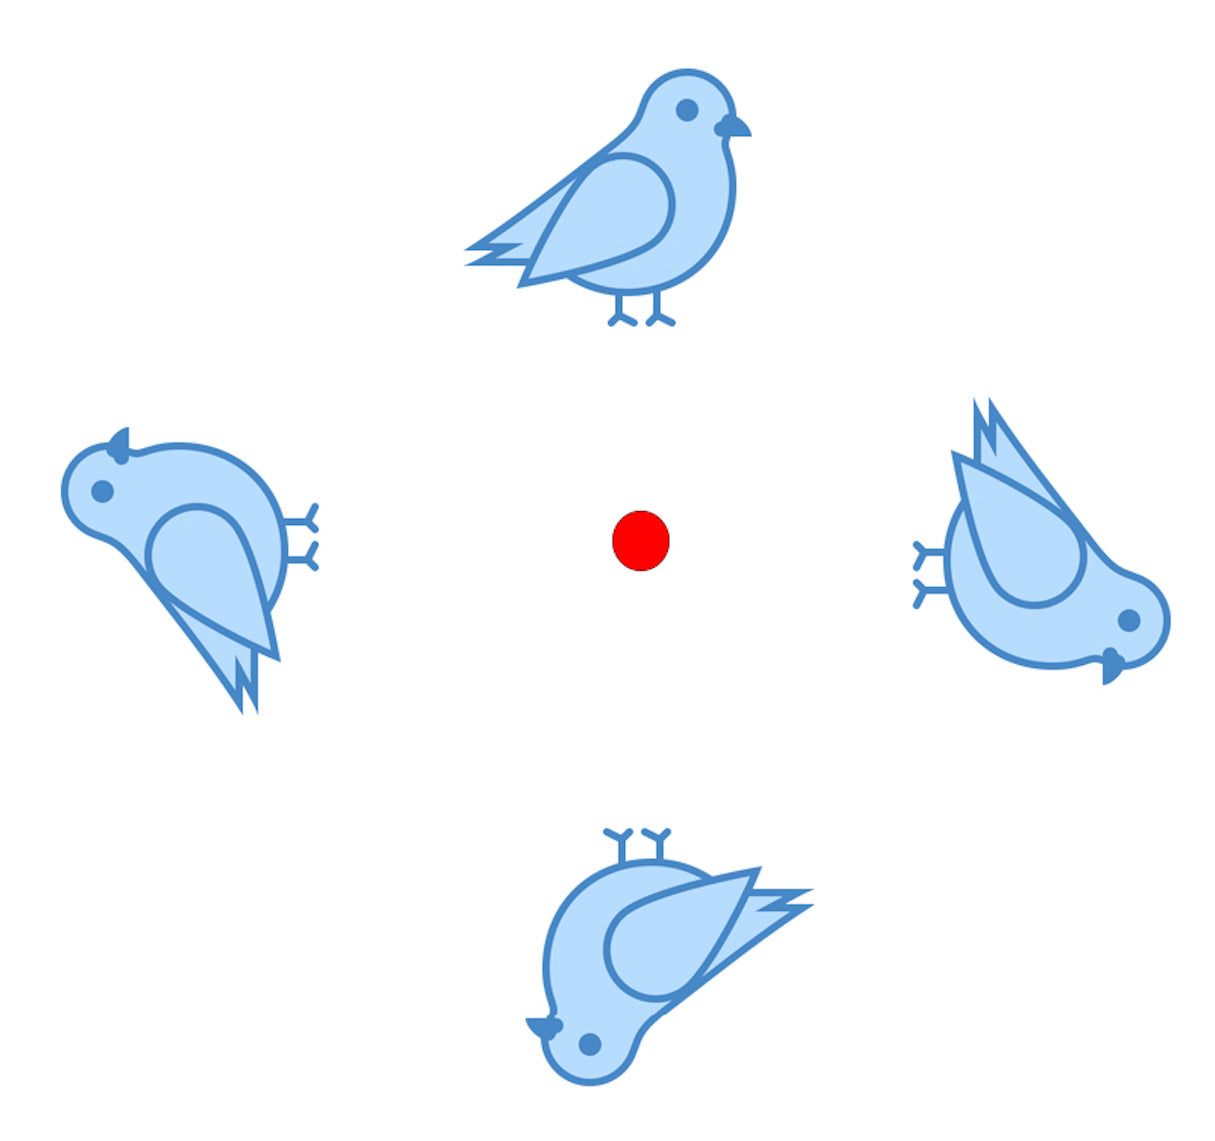 asymmetrical-design-rotation-symmetry-birds